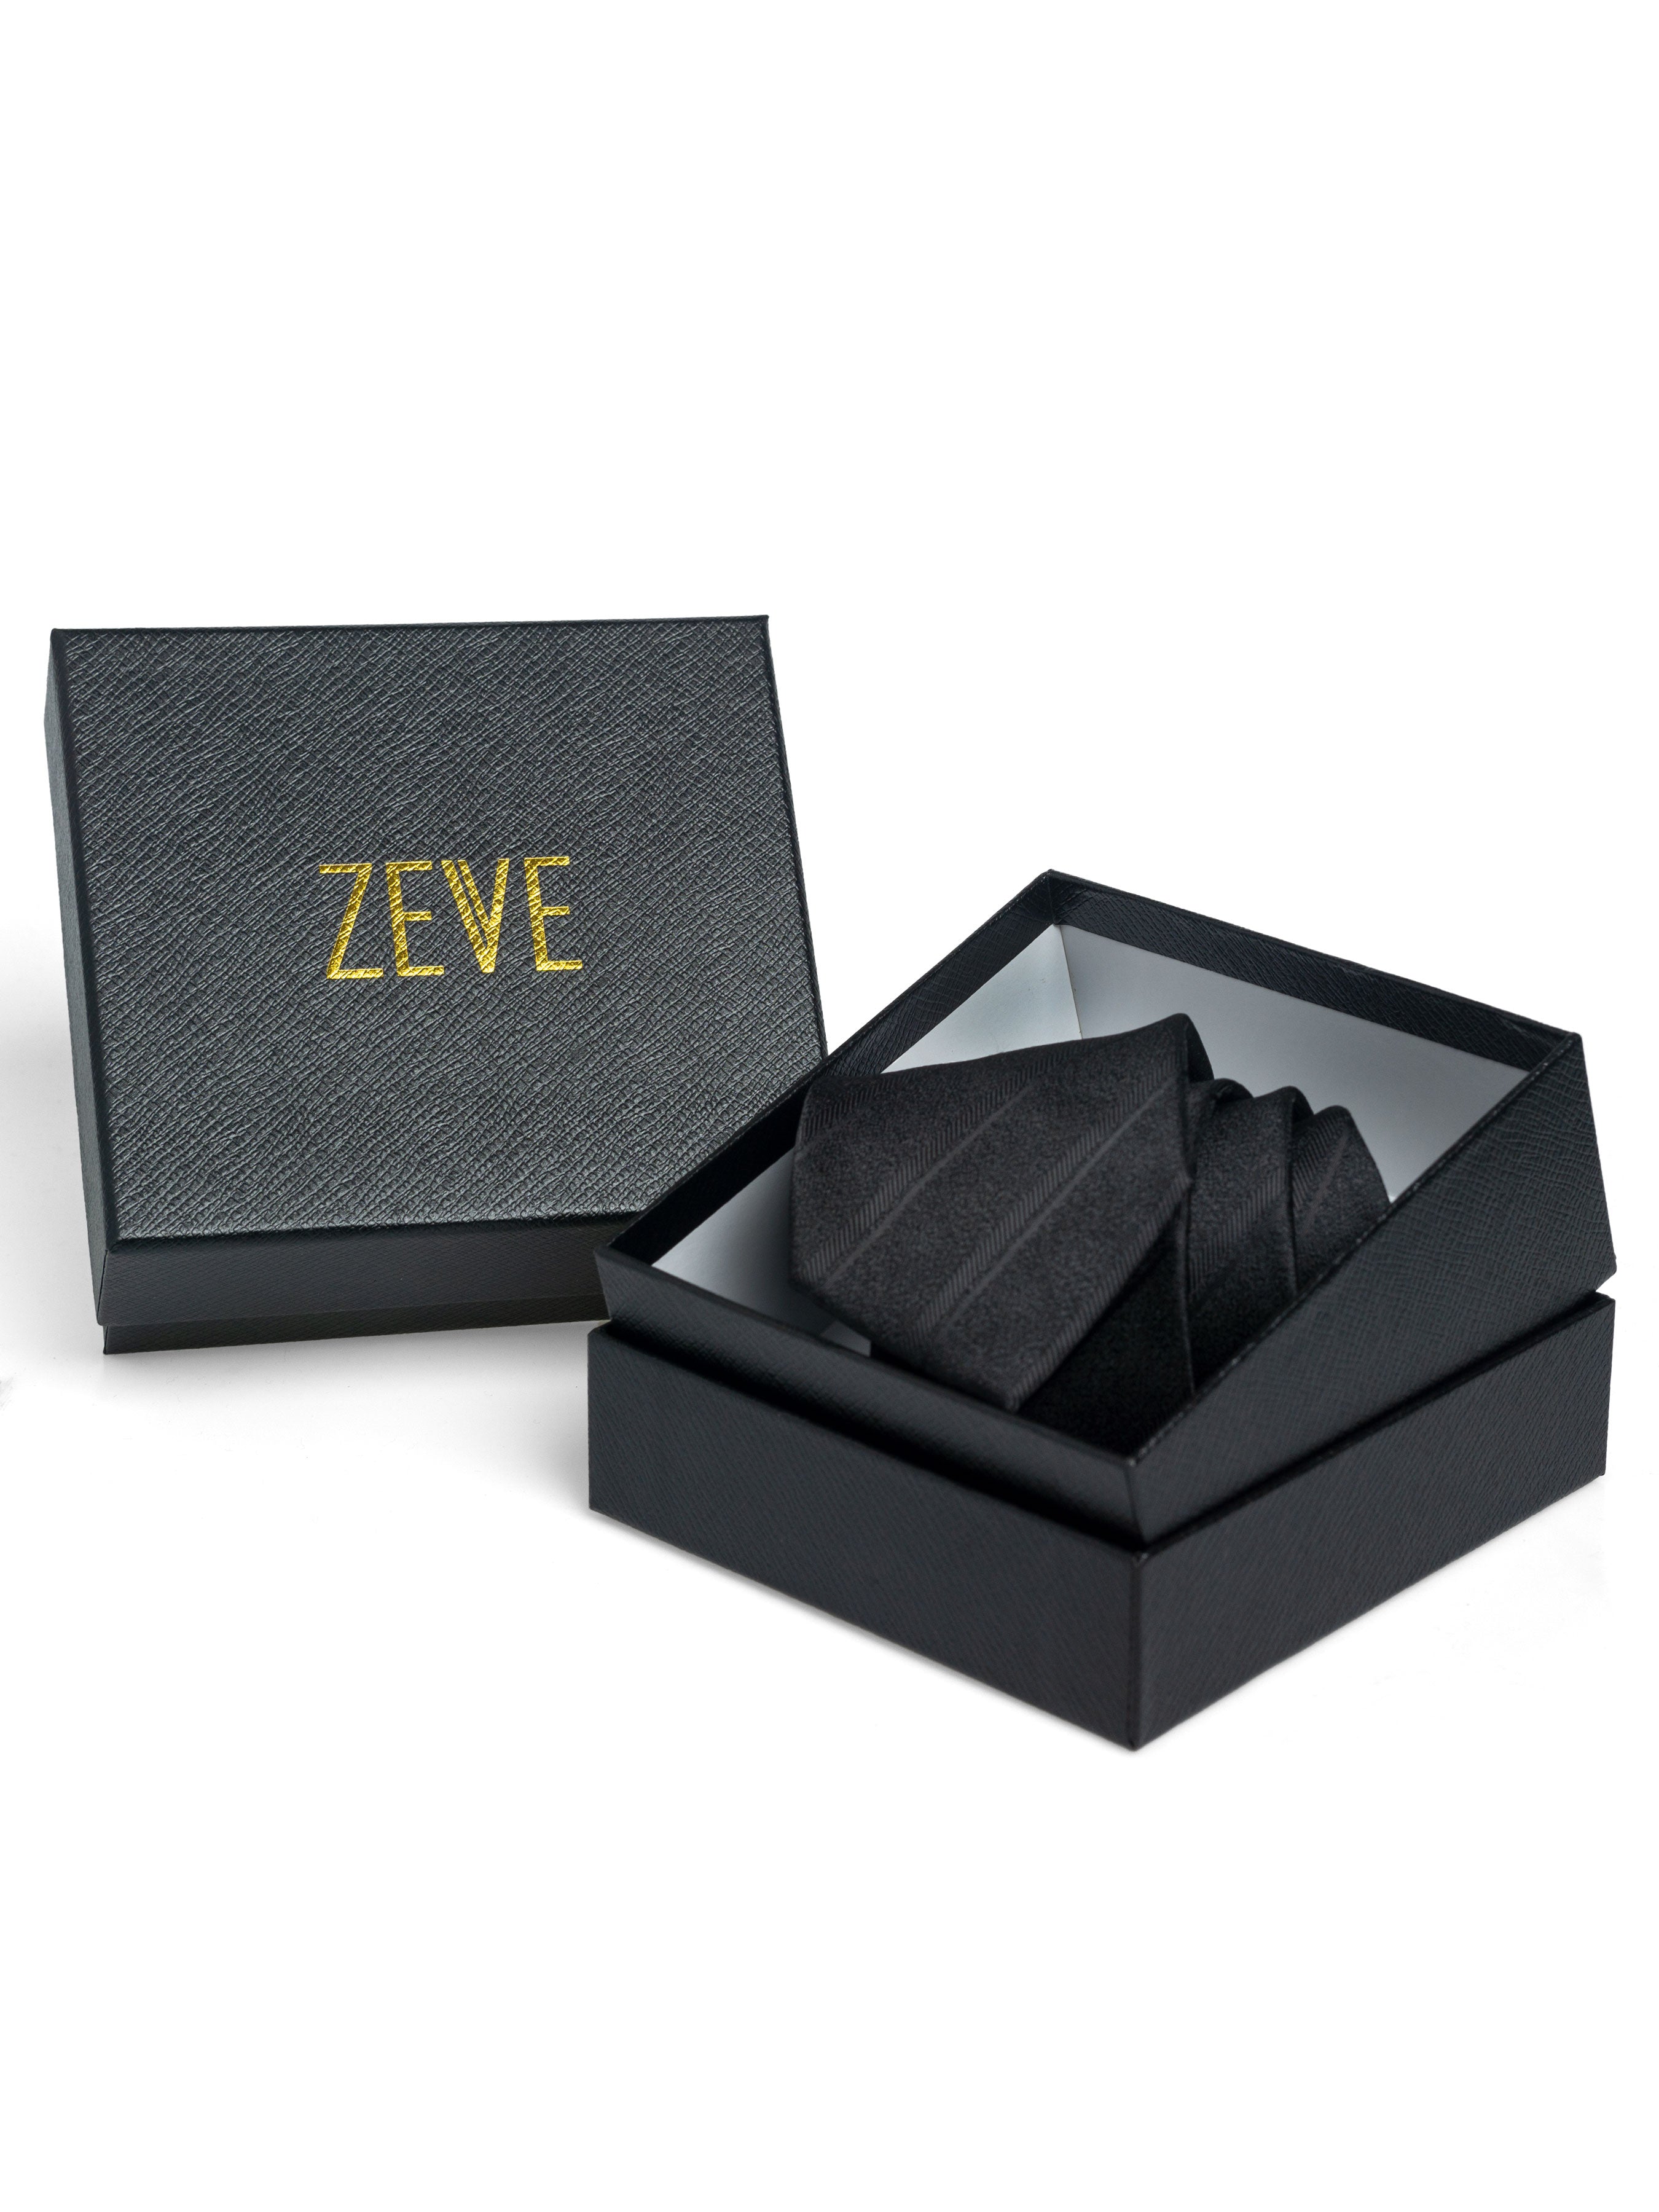 Polka Dot Tie - Black with Indigo Textured - Zeve Shoes